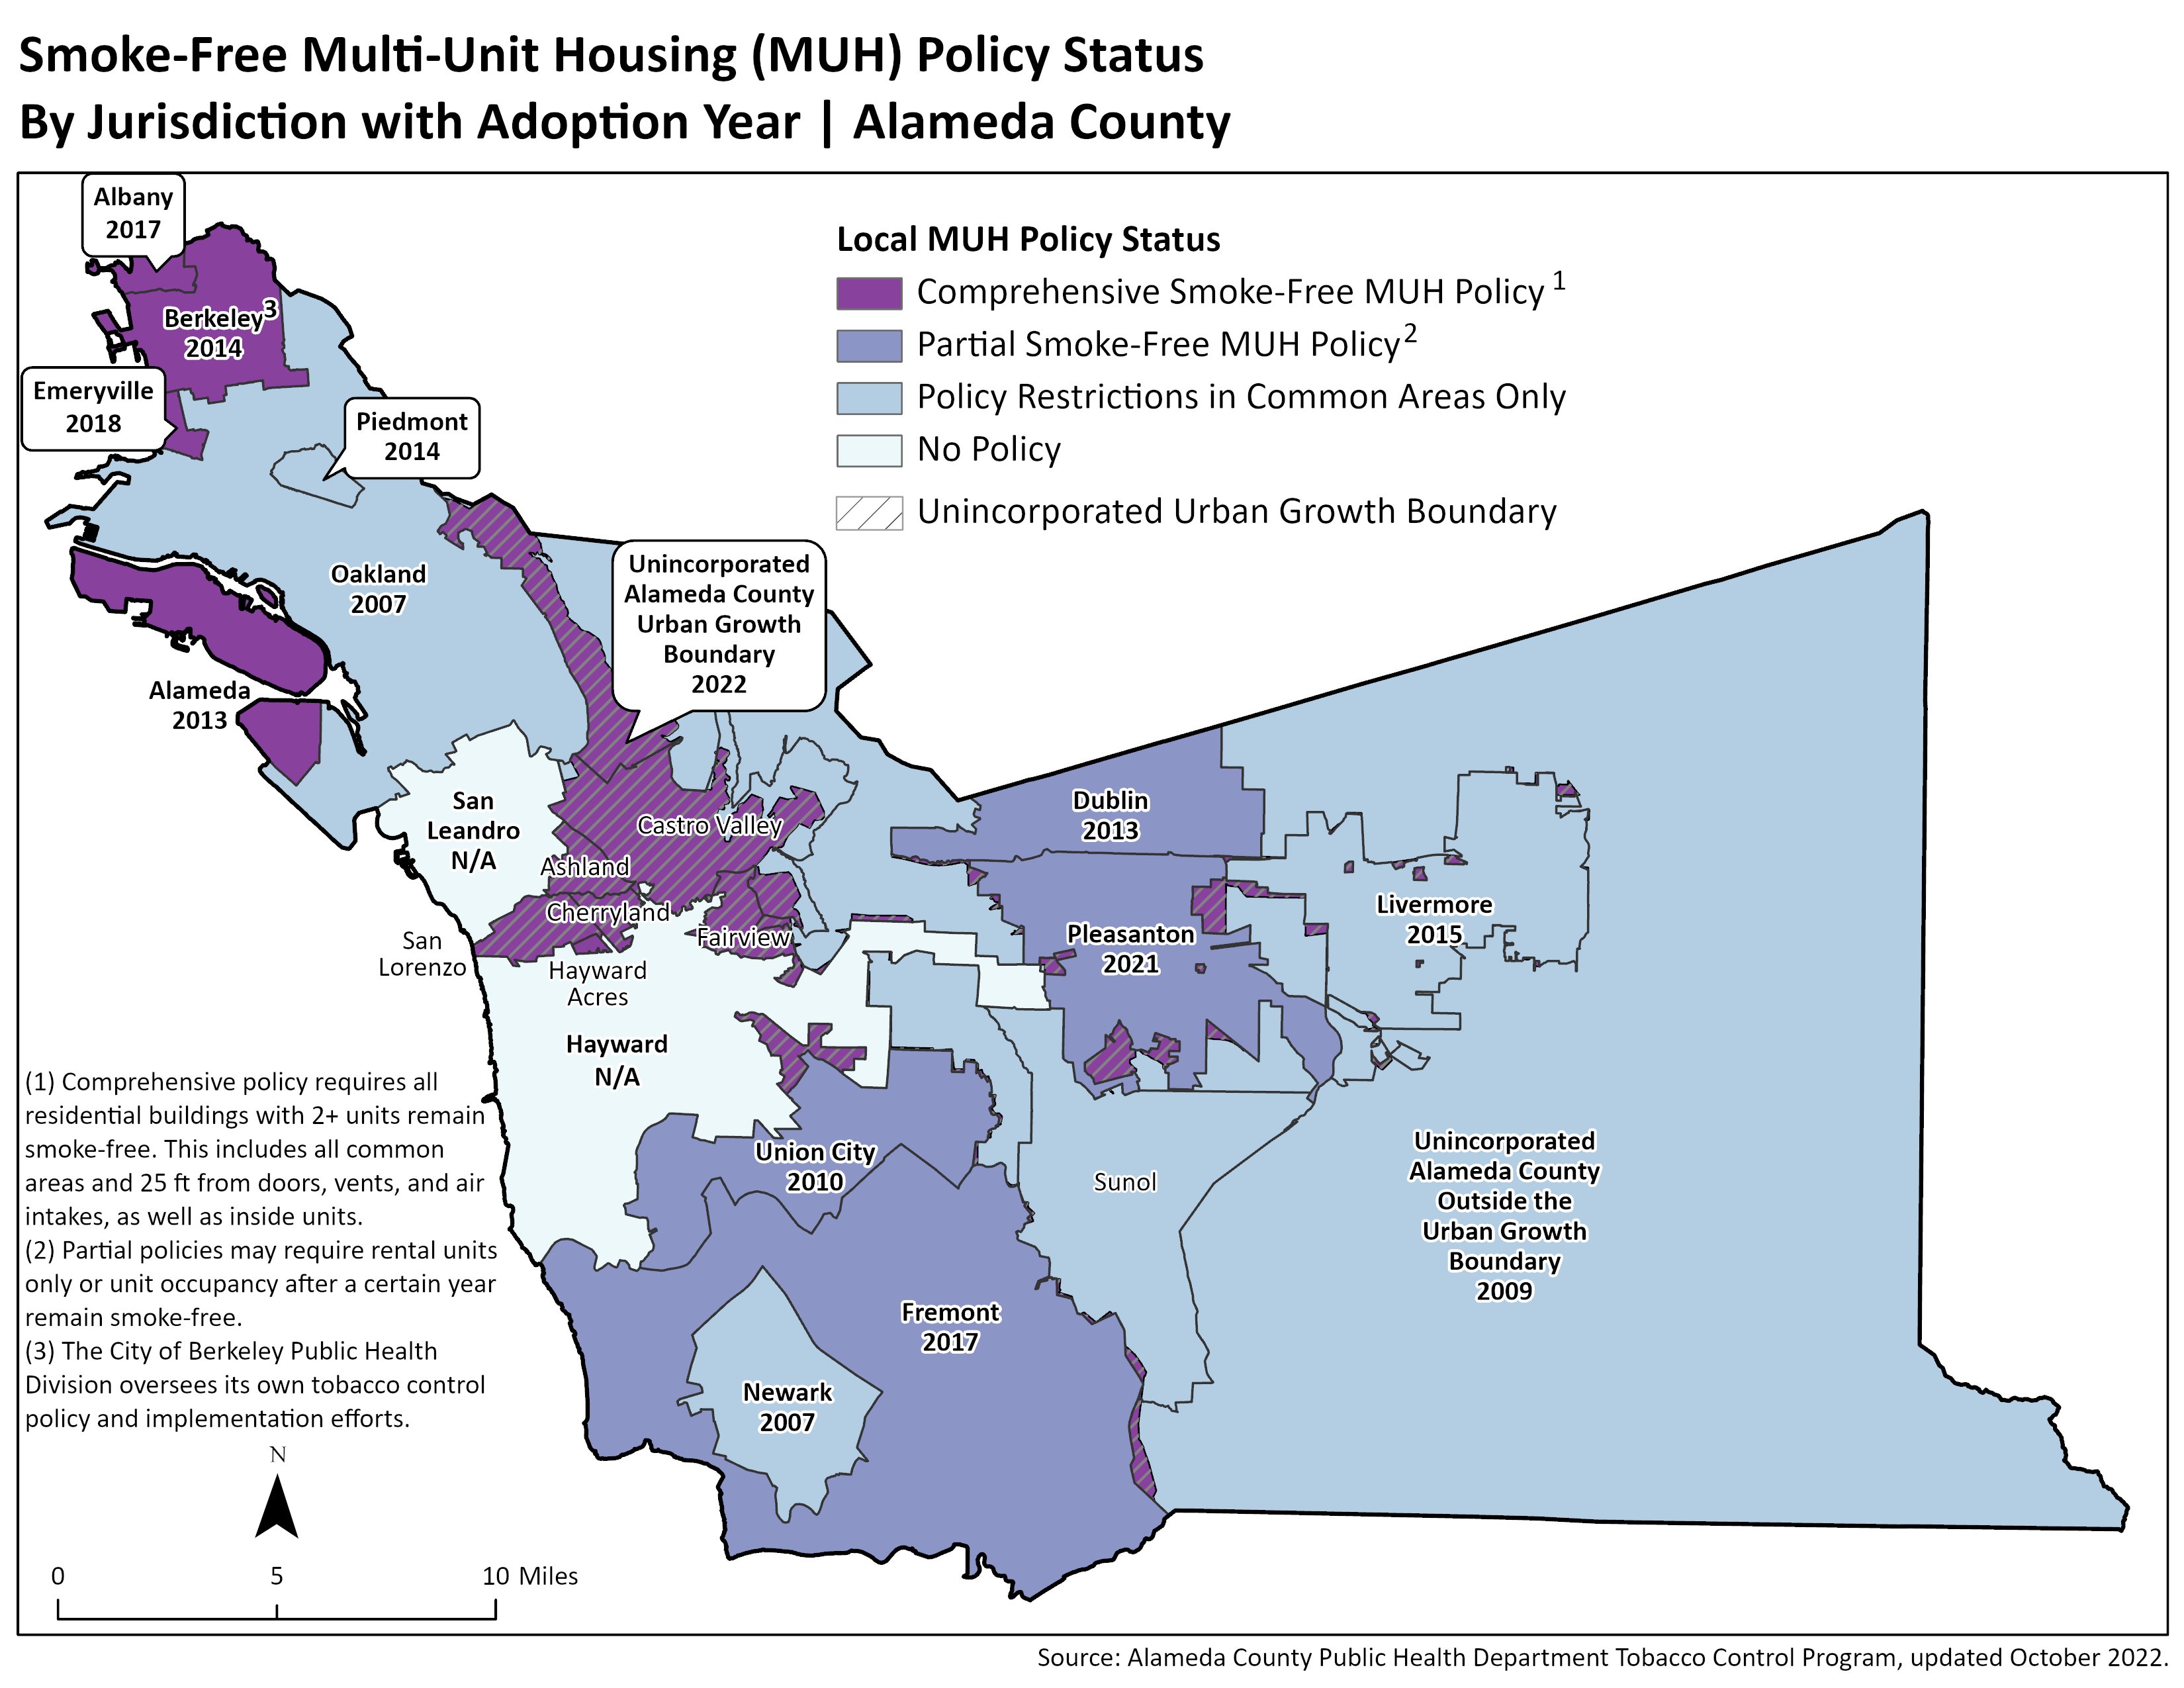 Smoke-Free Multi-Unit Housing Policy Status Map